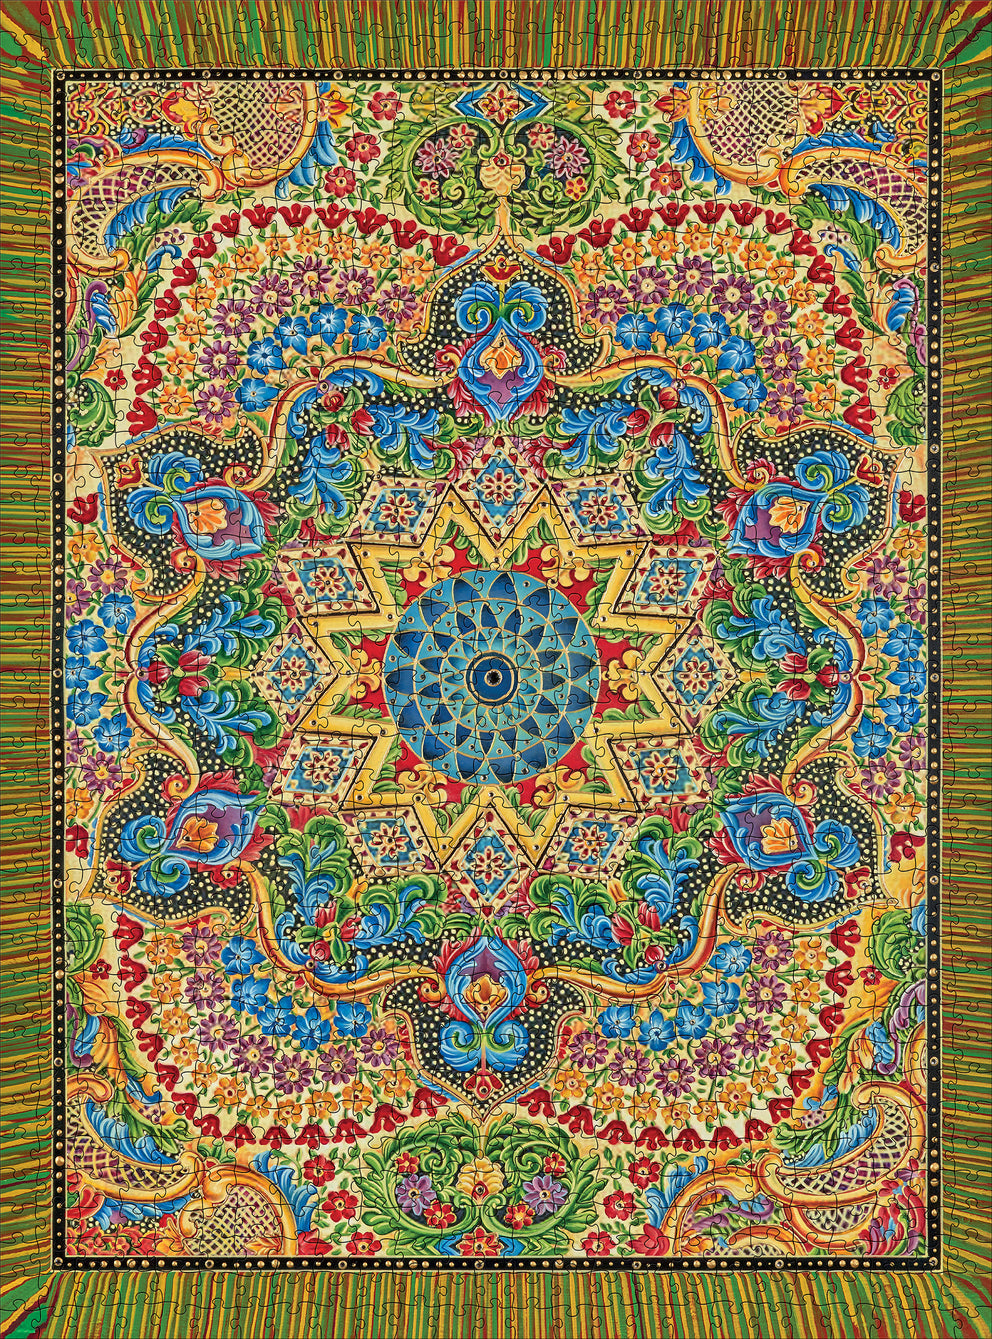 Pomegranate - Paul Heussenstamm: Tapestry Mandala - 1000 Piece Jigsaw Puzzle